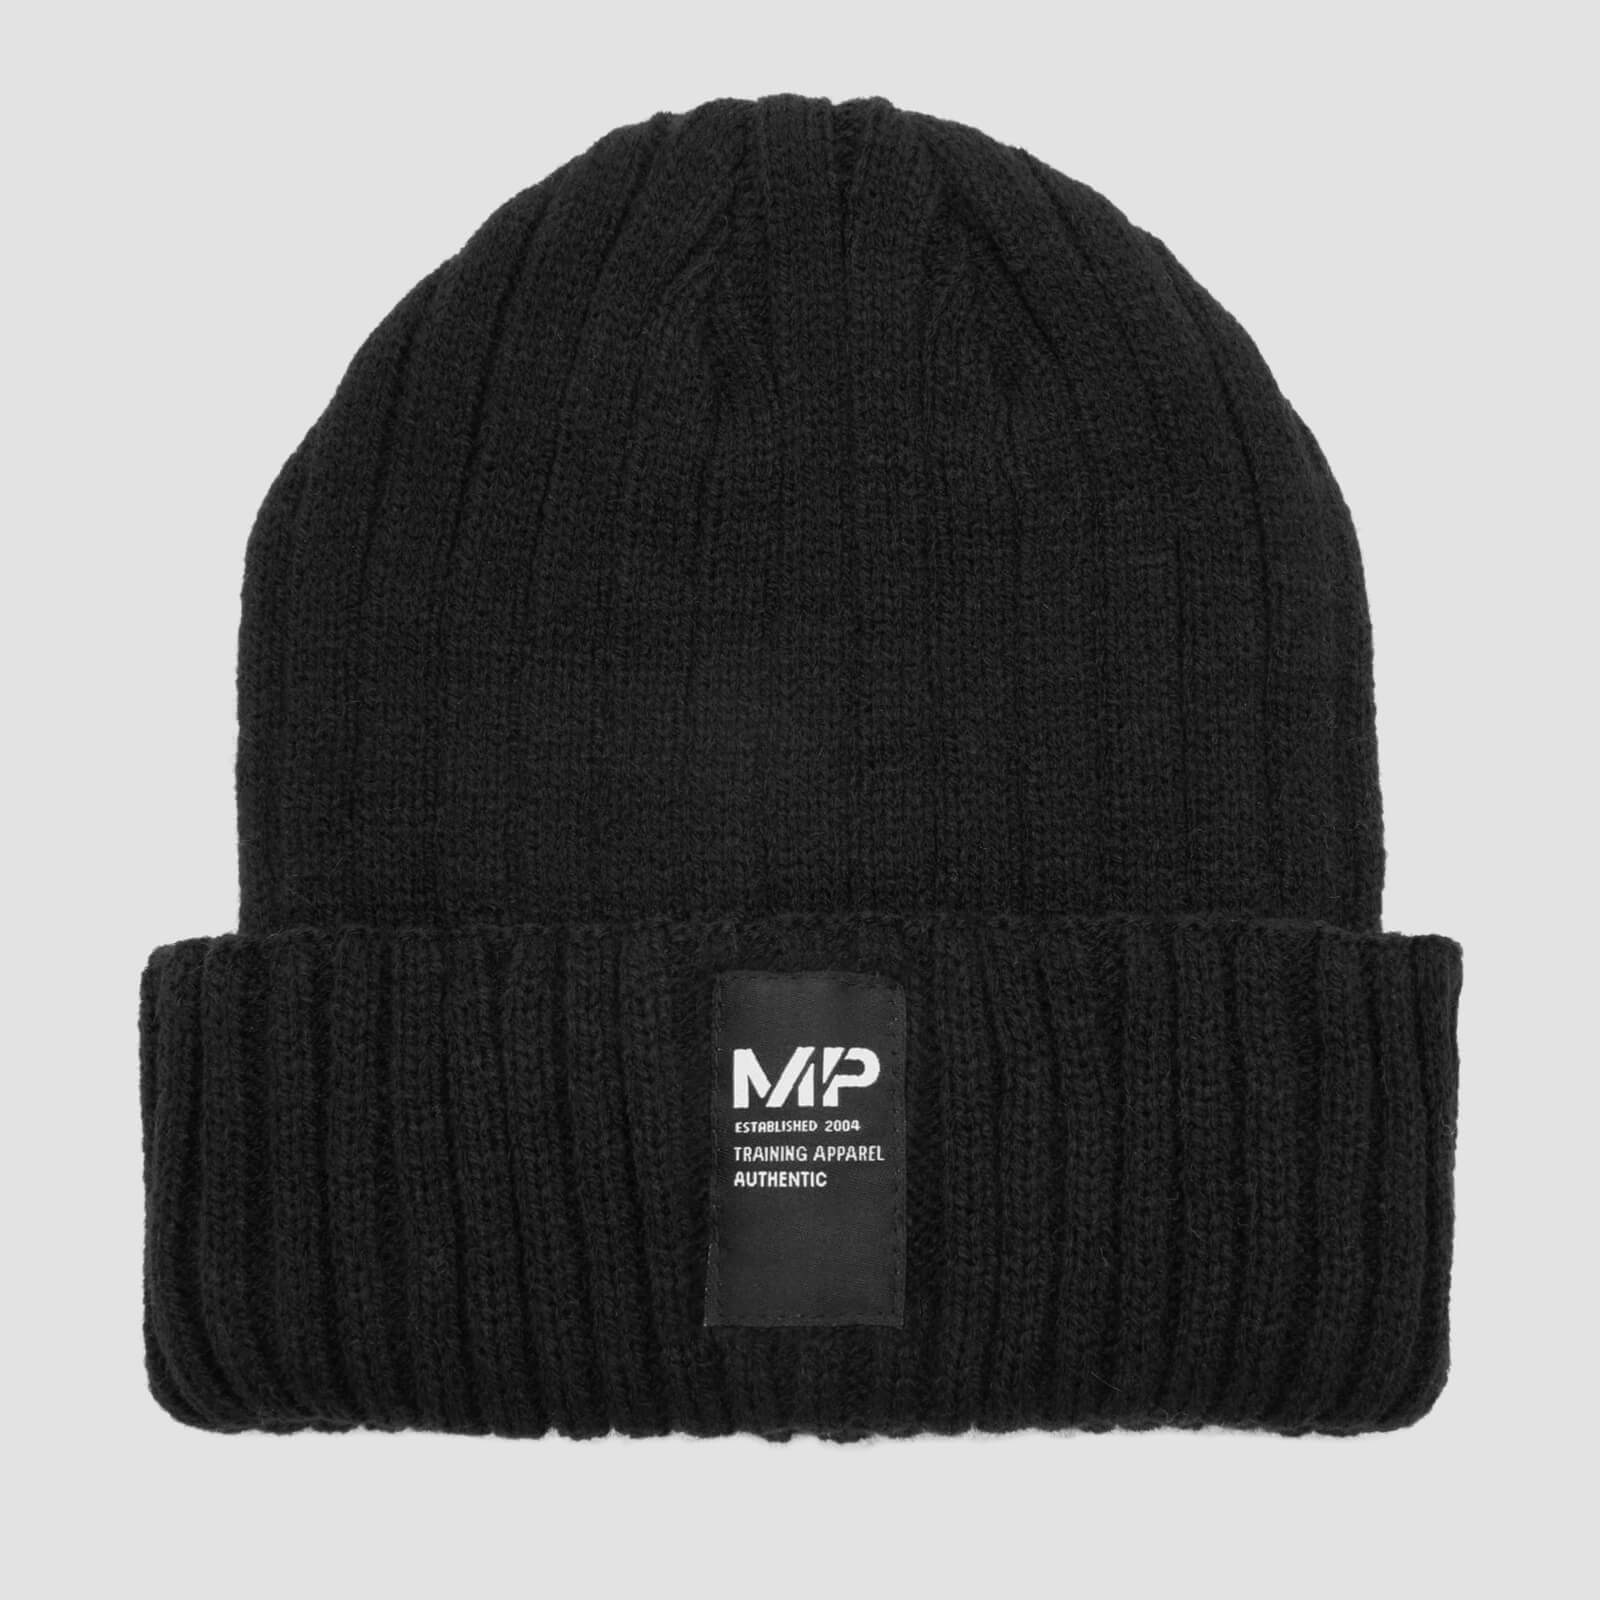 MP Beanie Hat - Black